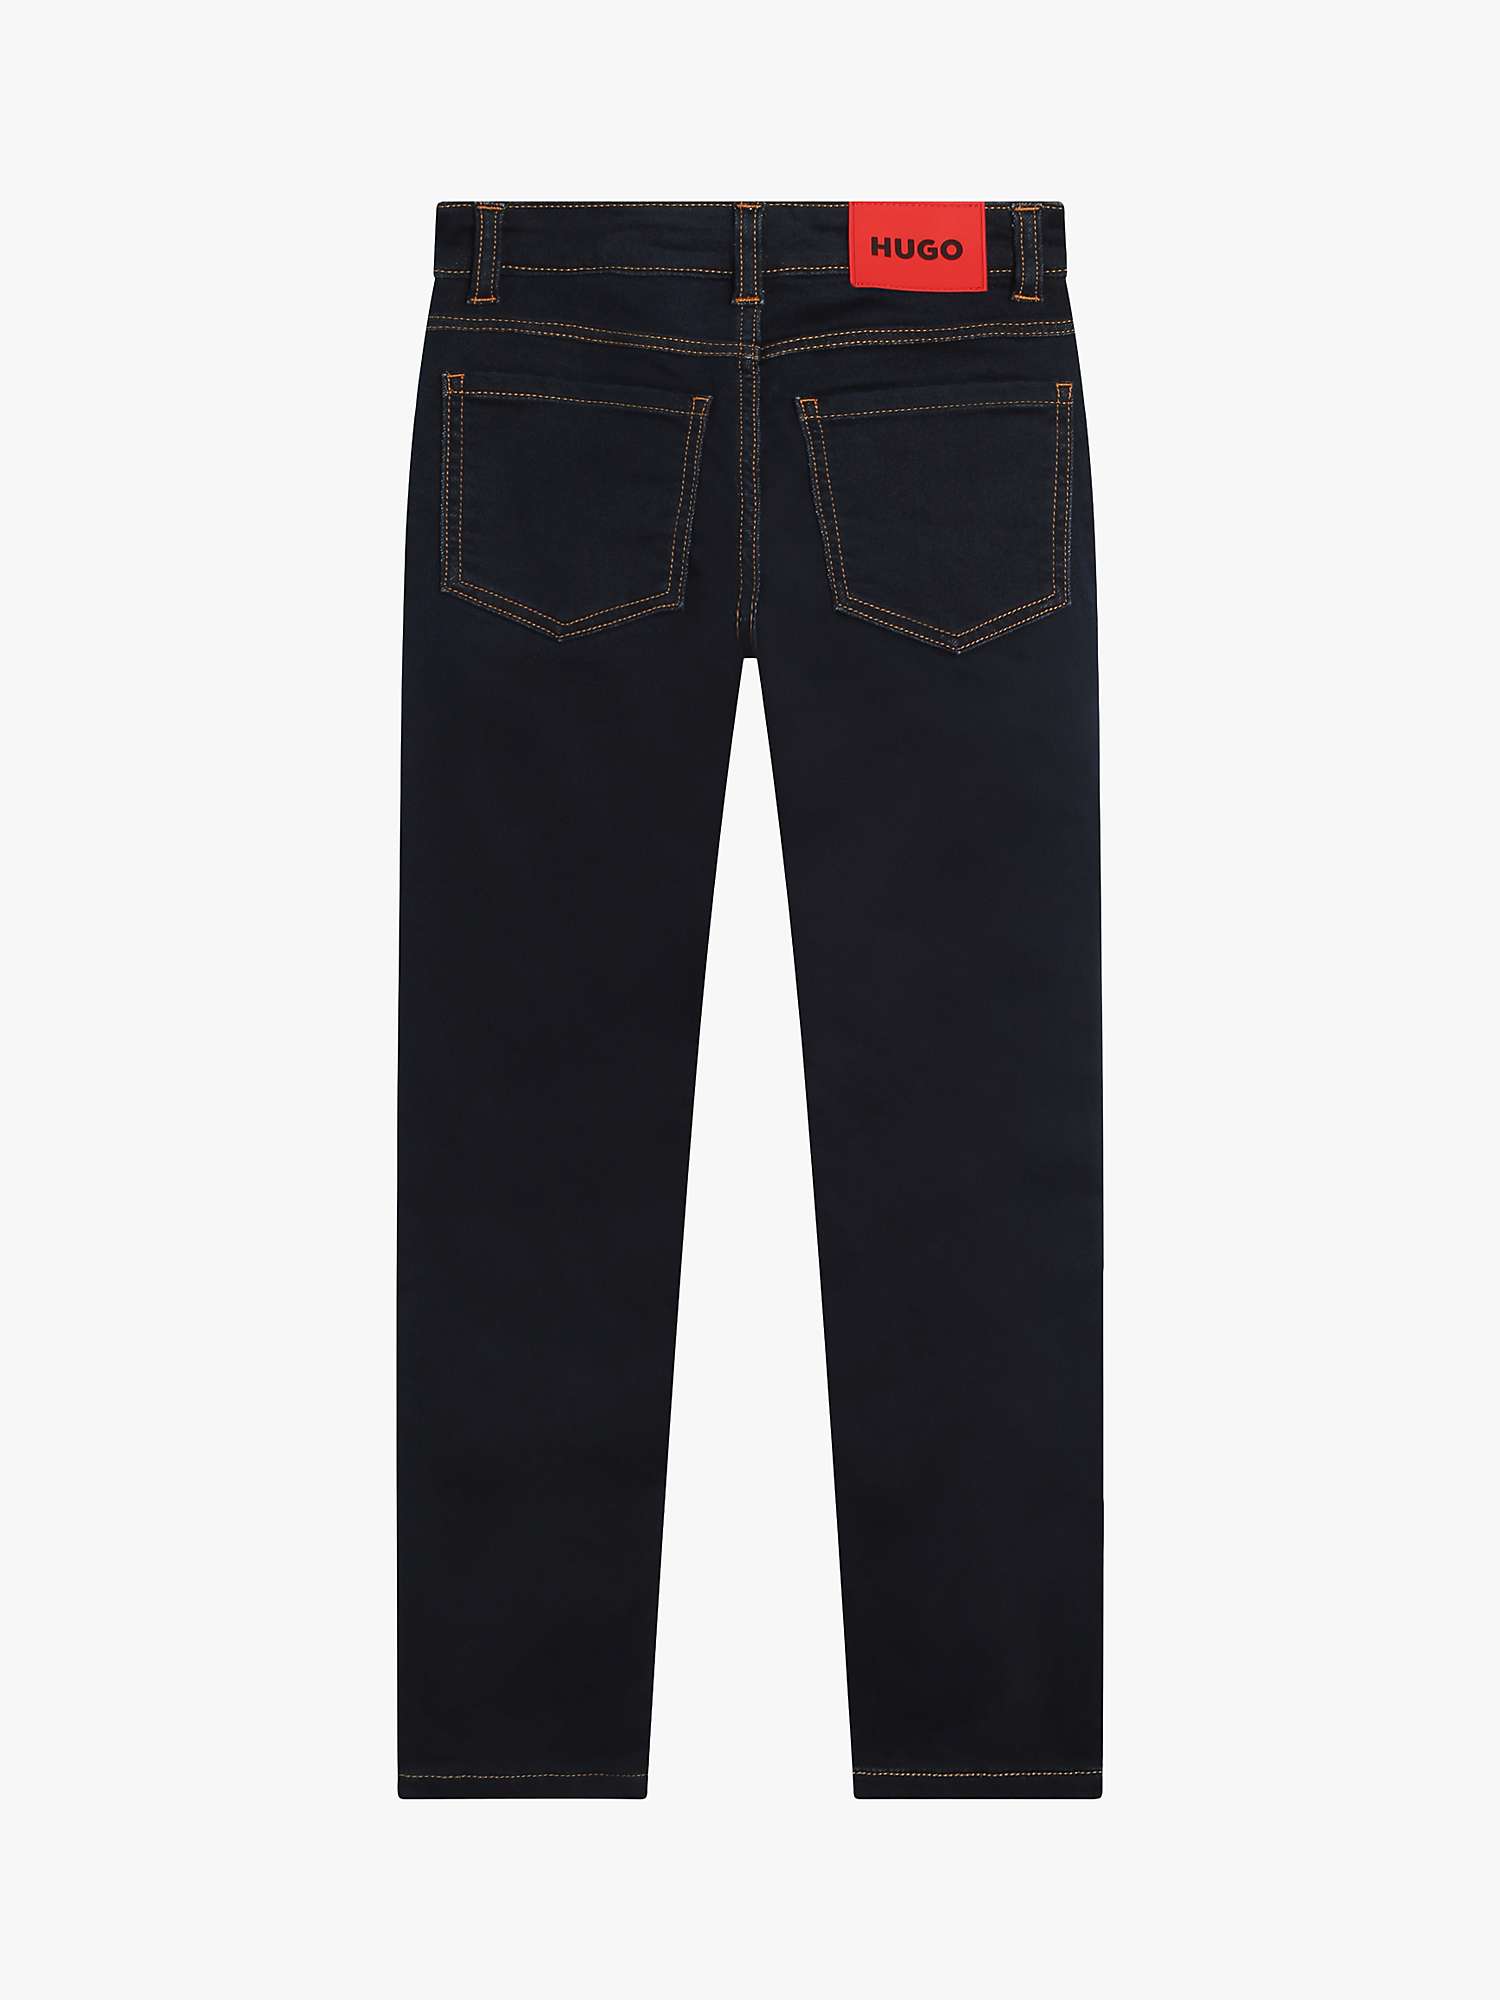 Buy BOSS Kids' Slim Fit Jeans, Black Online at johnlewis.com